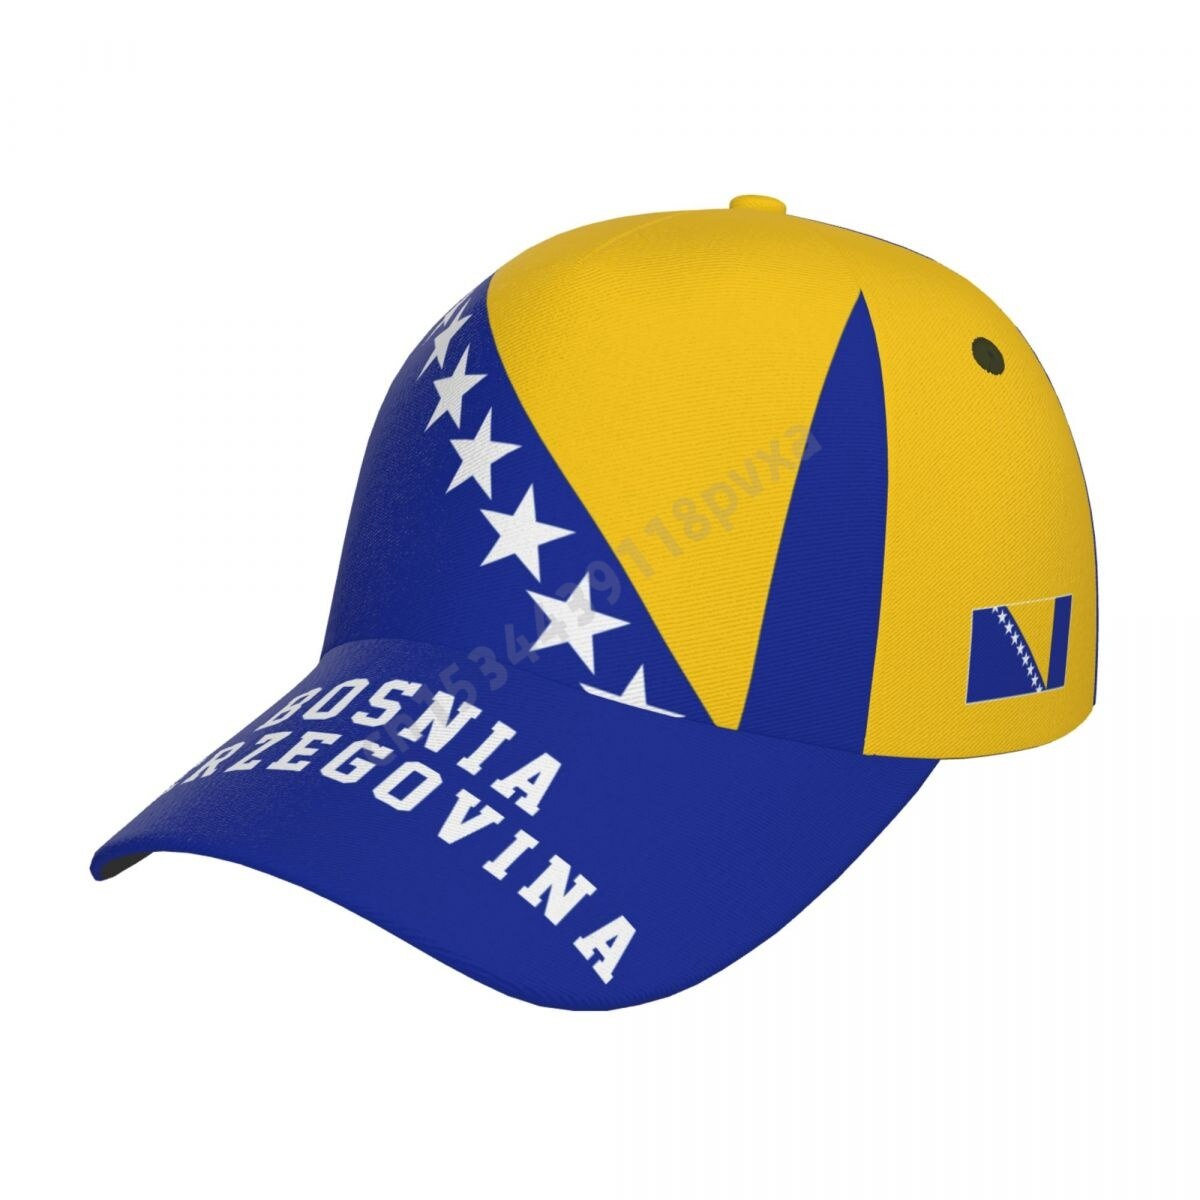 Bosnia and herzegovina flag baseball cap patriotic hats for baseball soccer fans